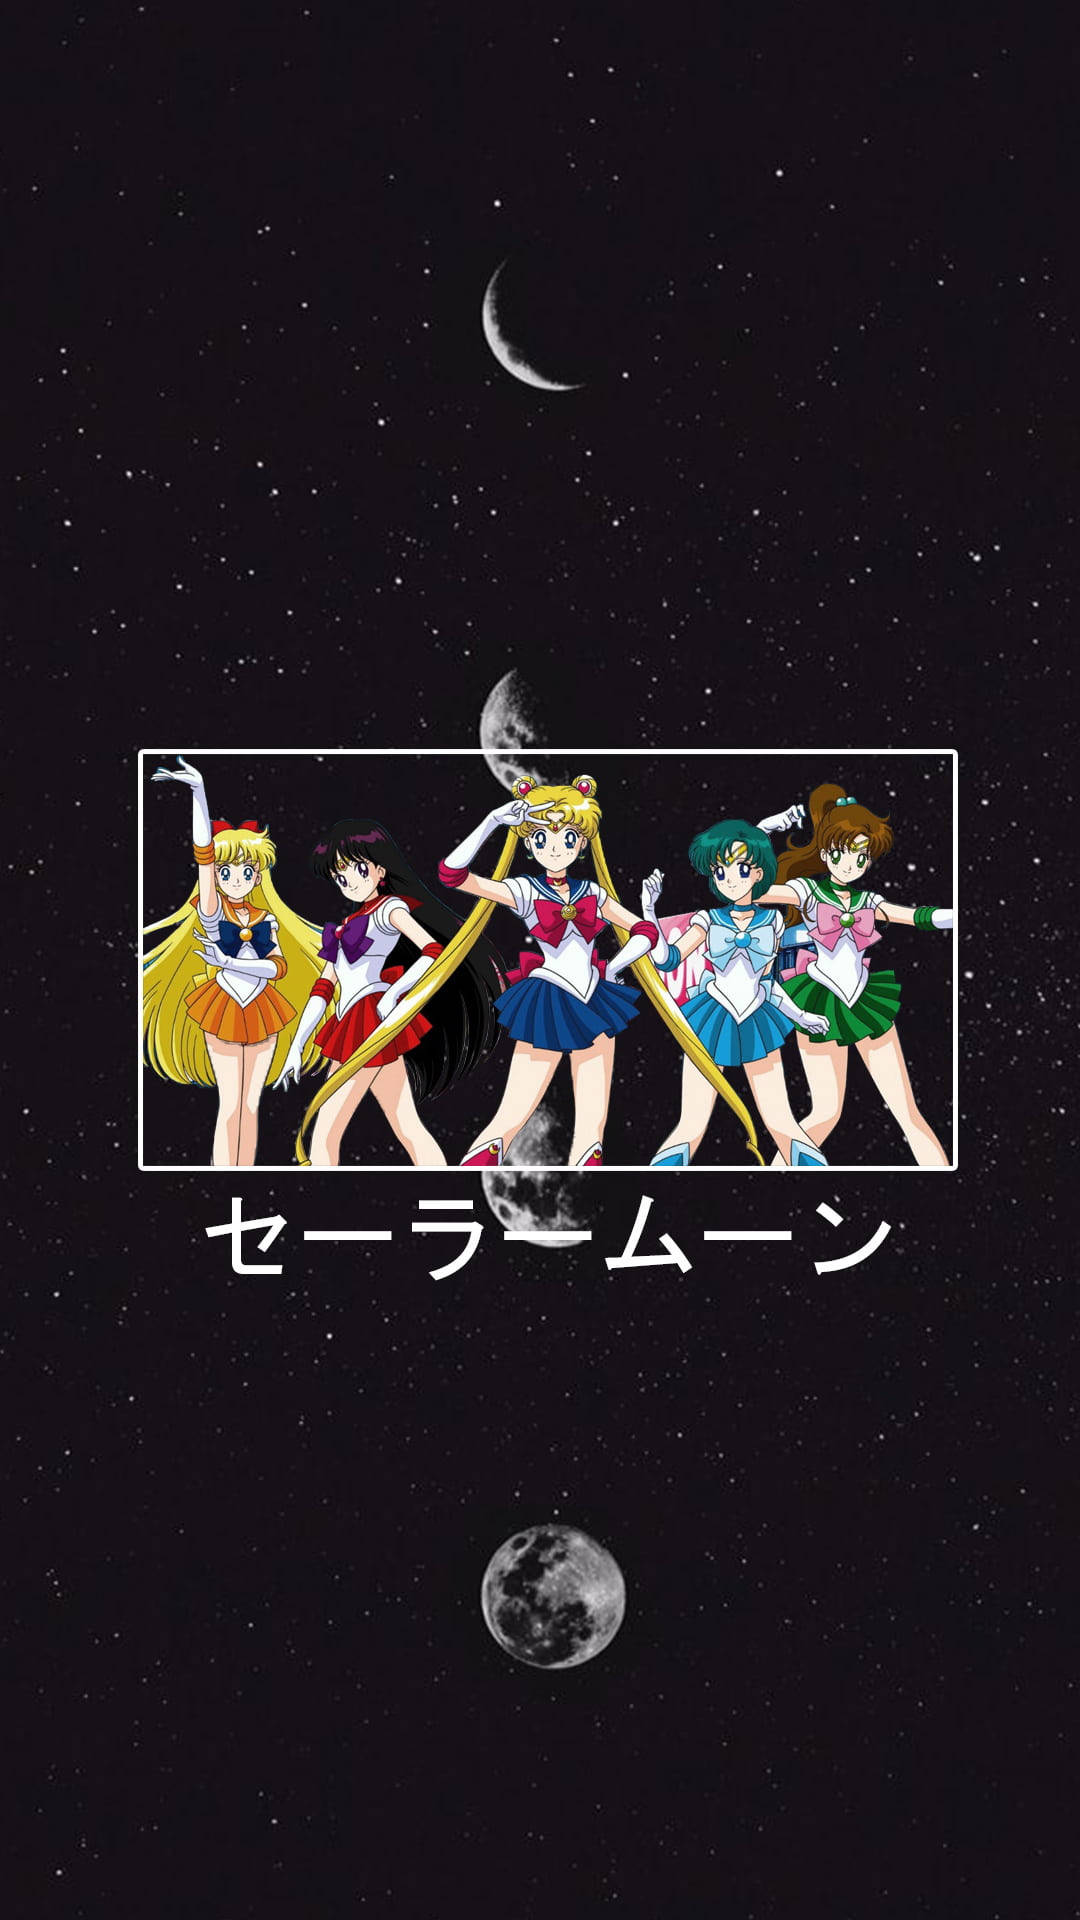 Sailor Moon Aesthetic Anime Girl Iphone Background